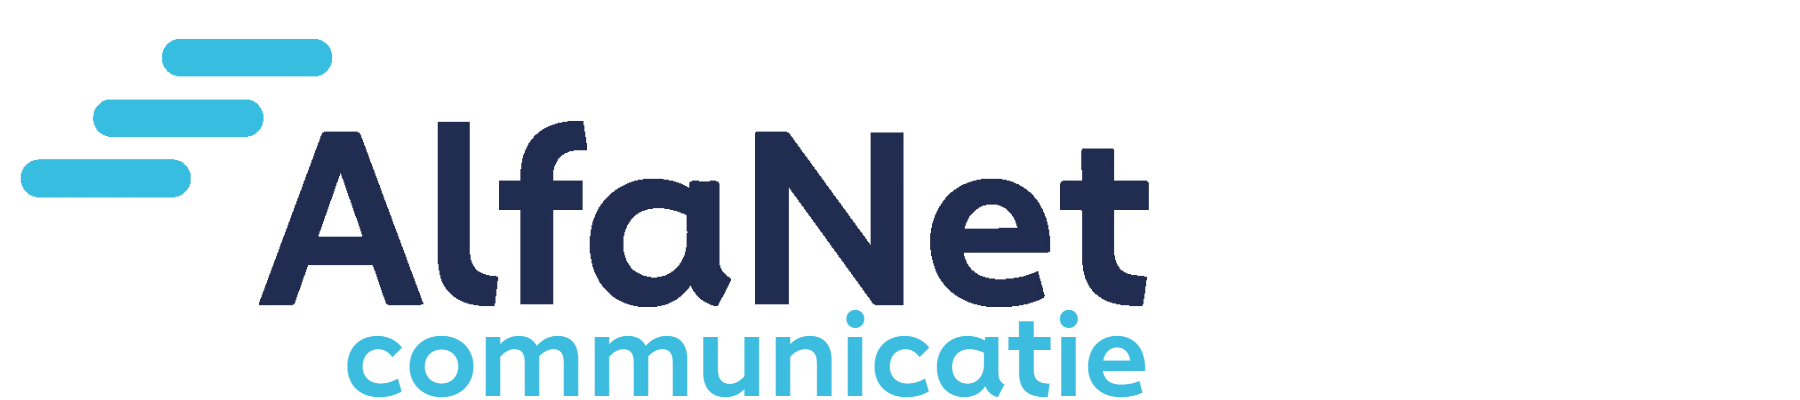 AlfaNet Communicatie logo